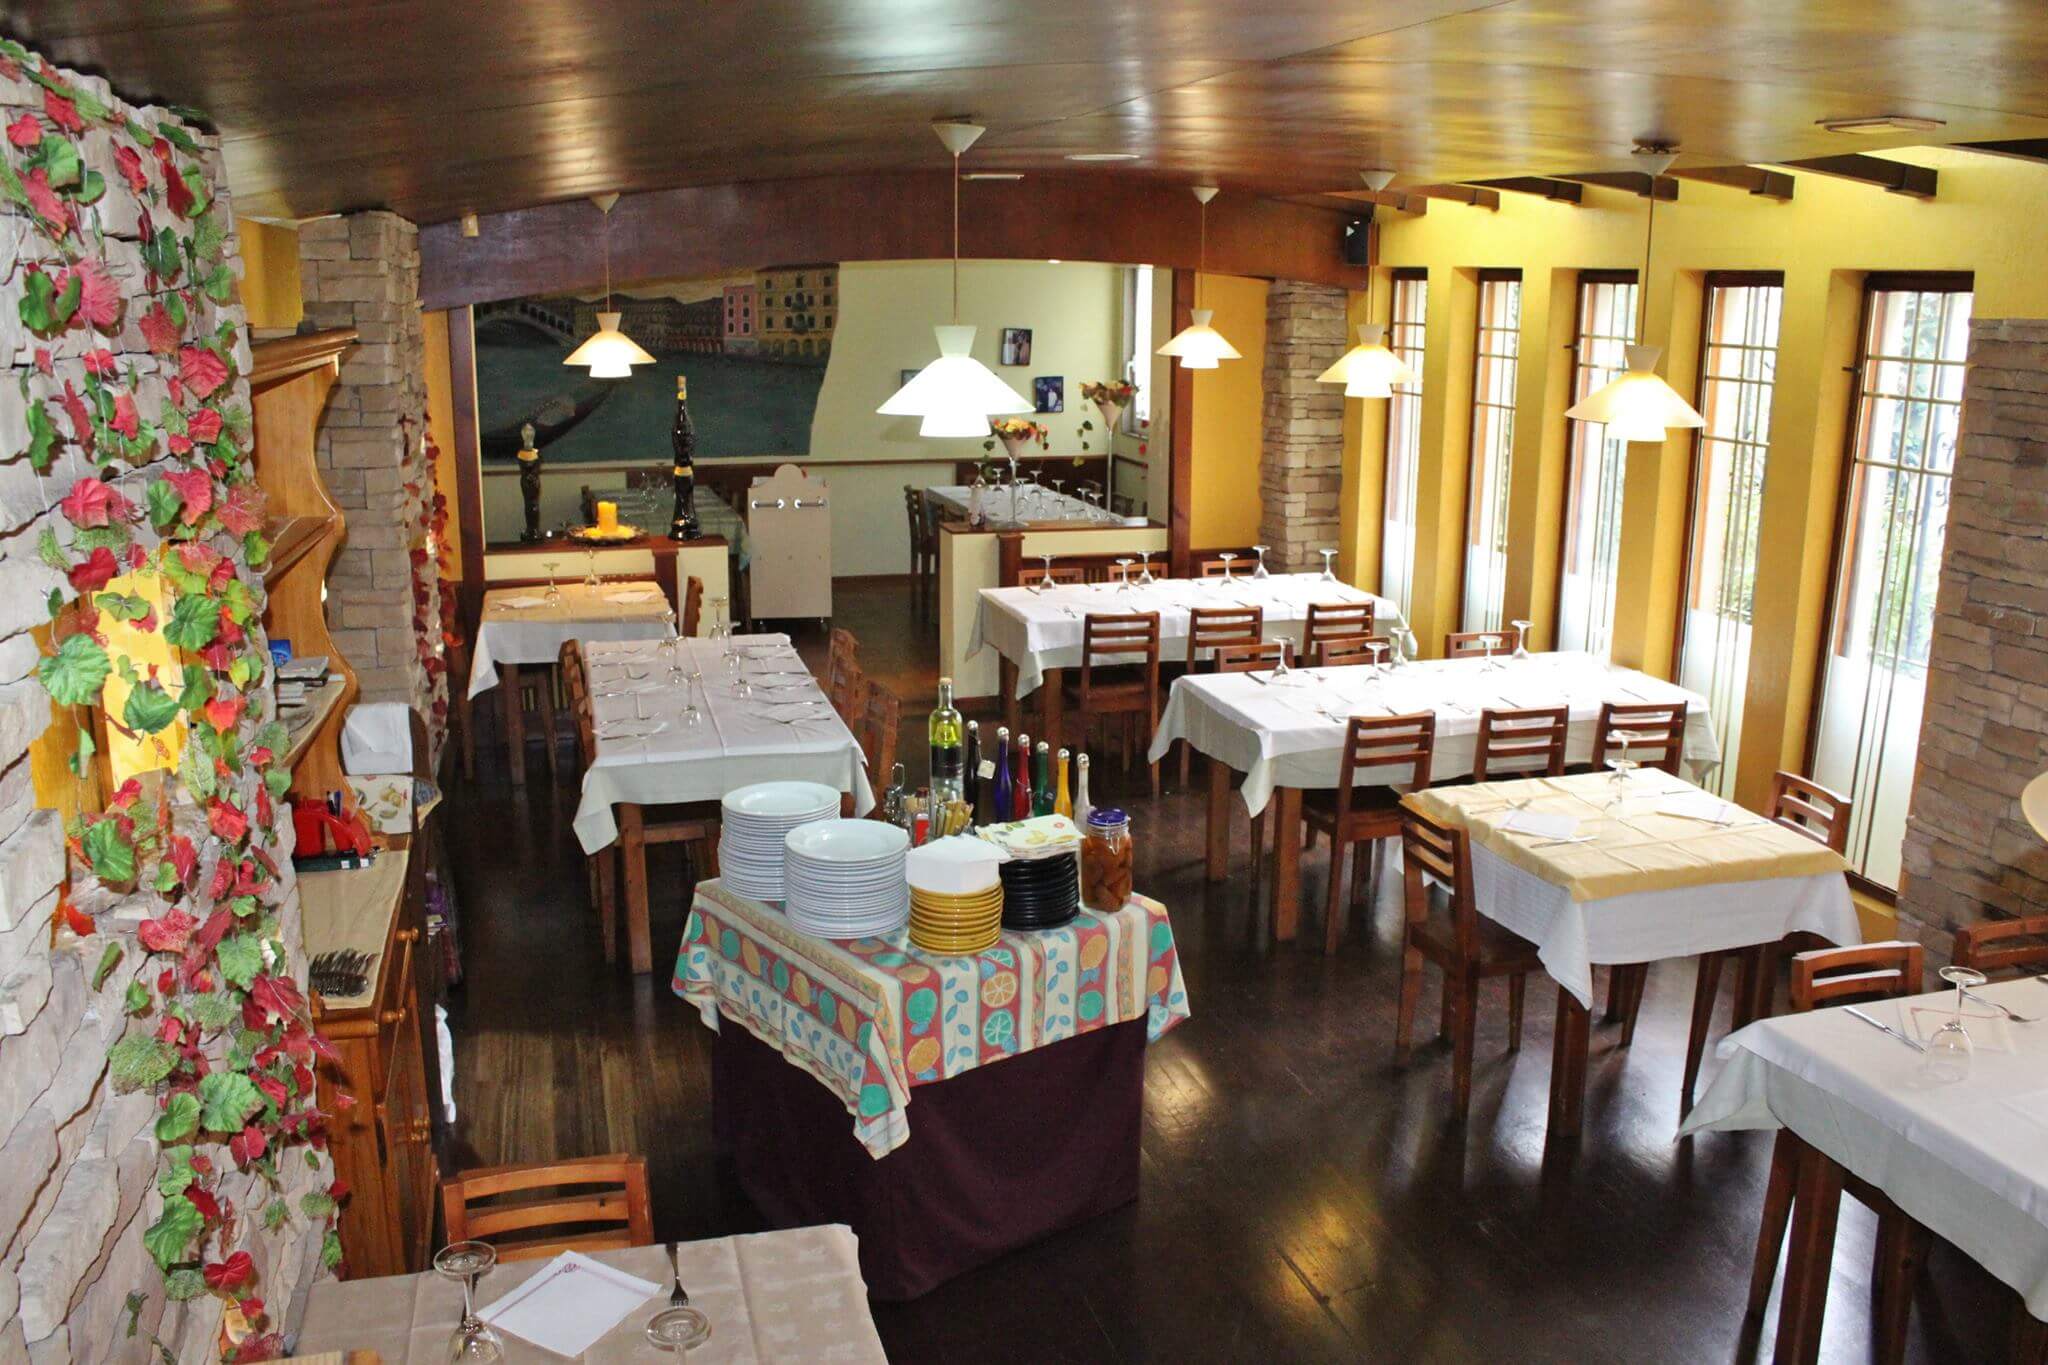 restaurante-tivolino-galicia-interior-comedor-mesas-sillas-lamparas.jpg